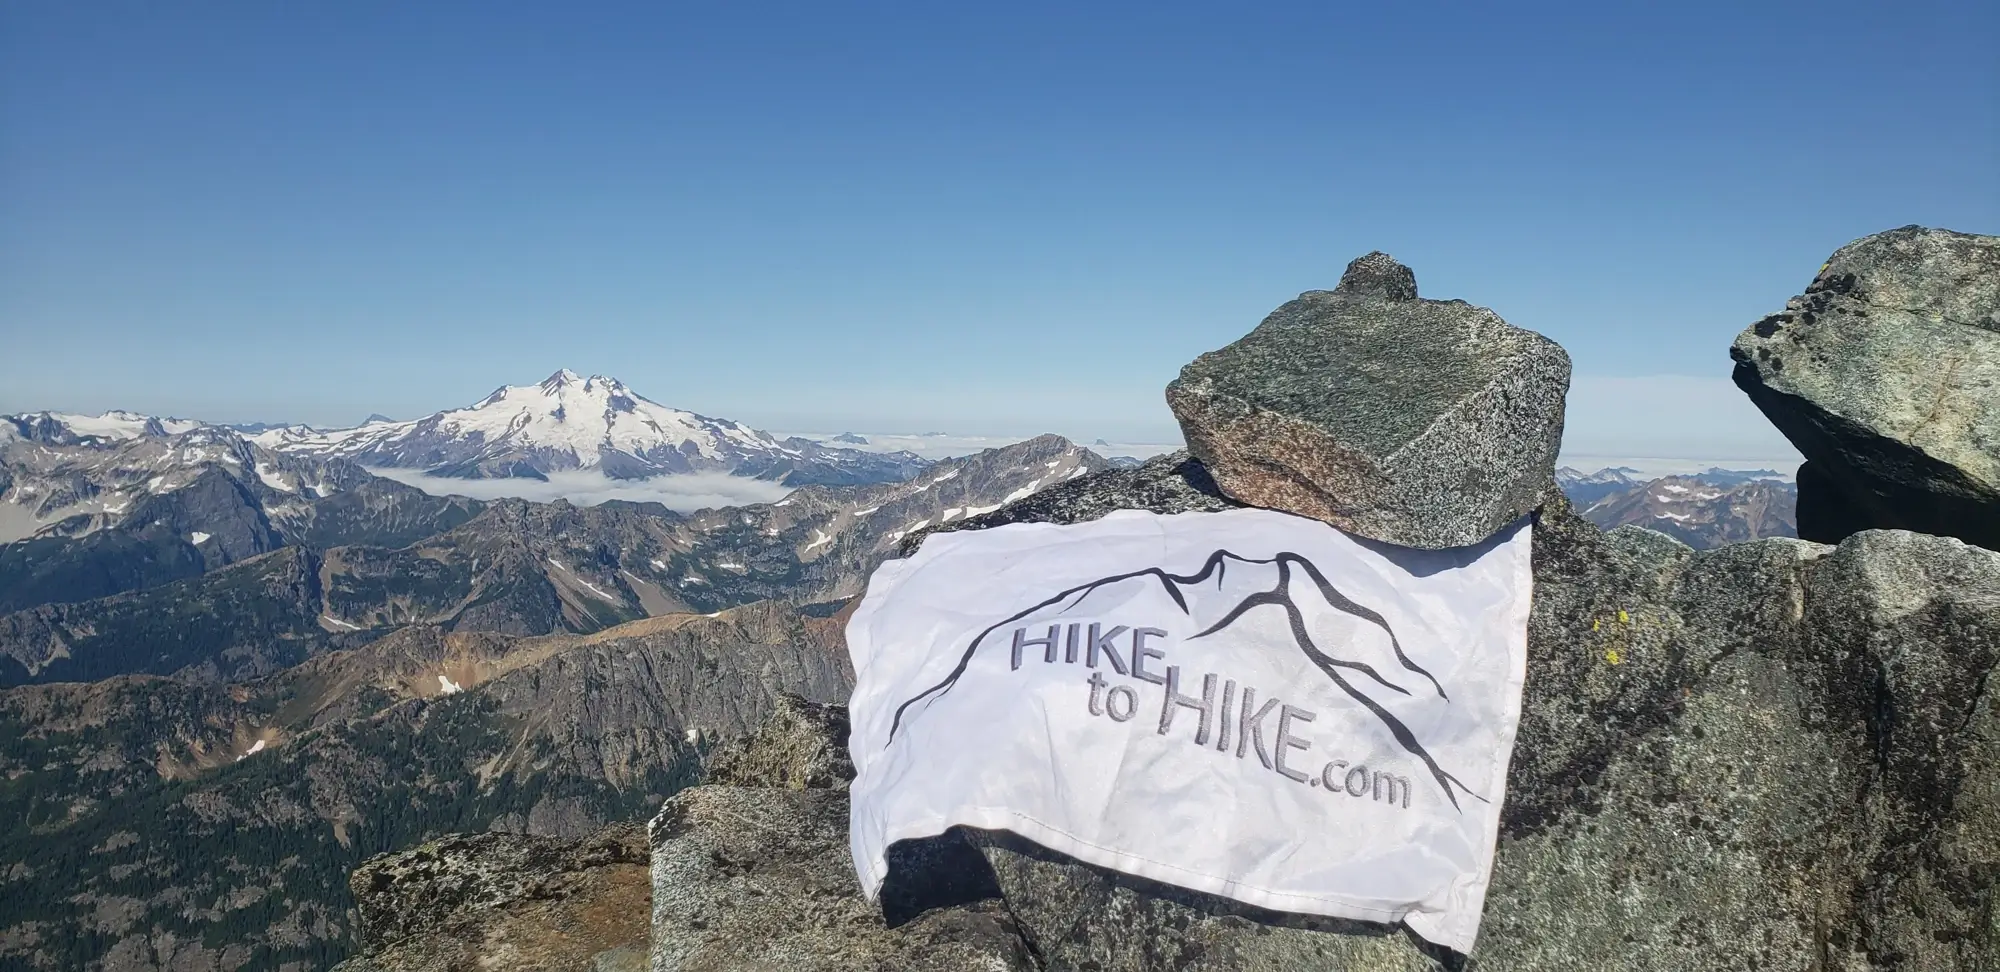 summit flag for hike2hike.com